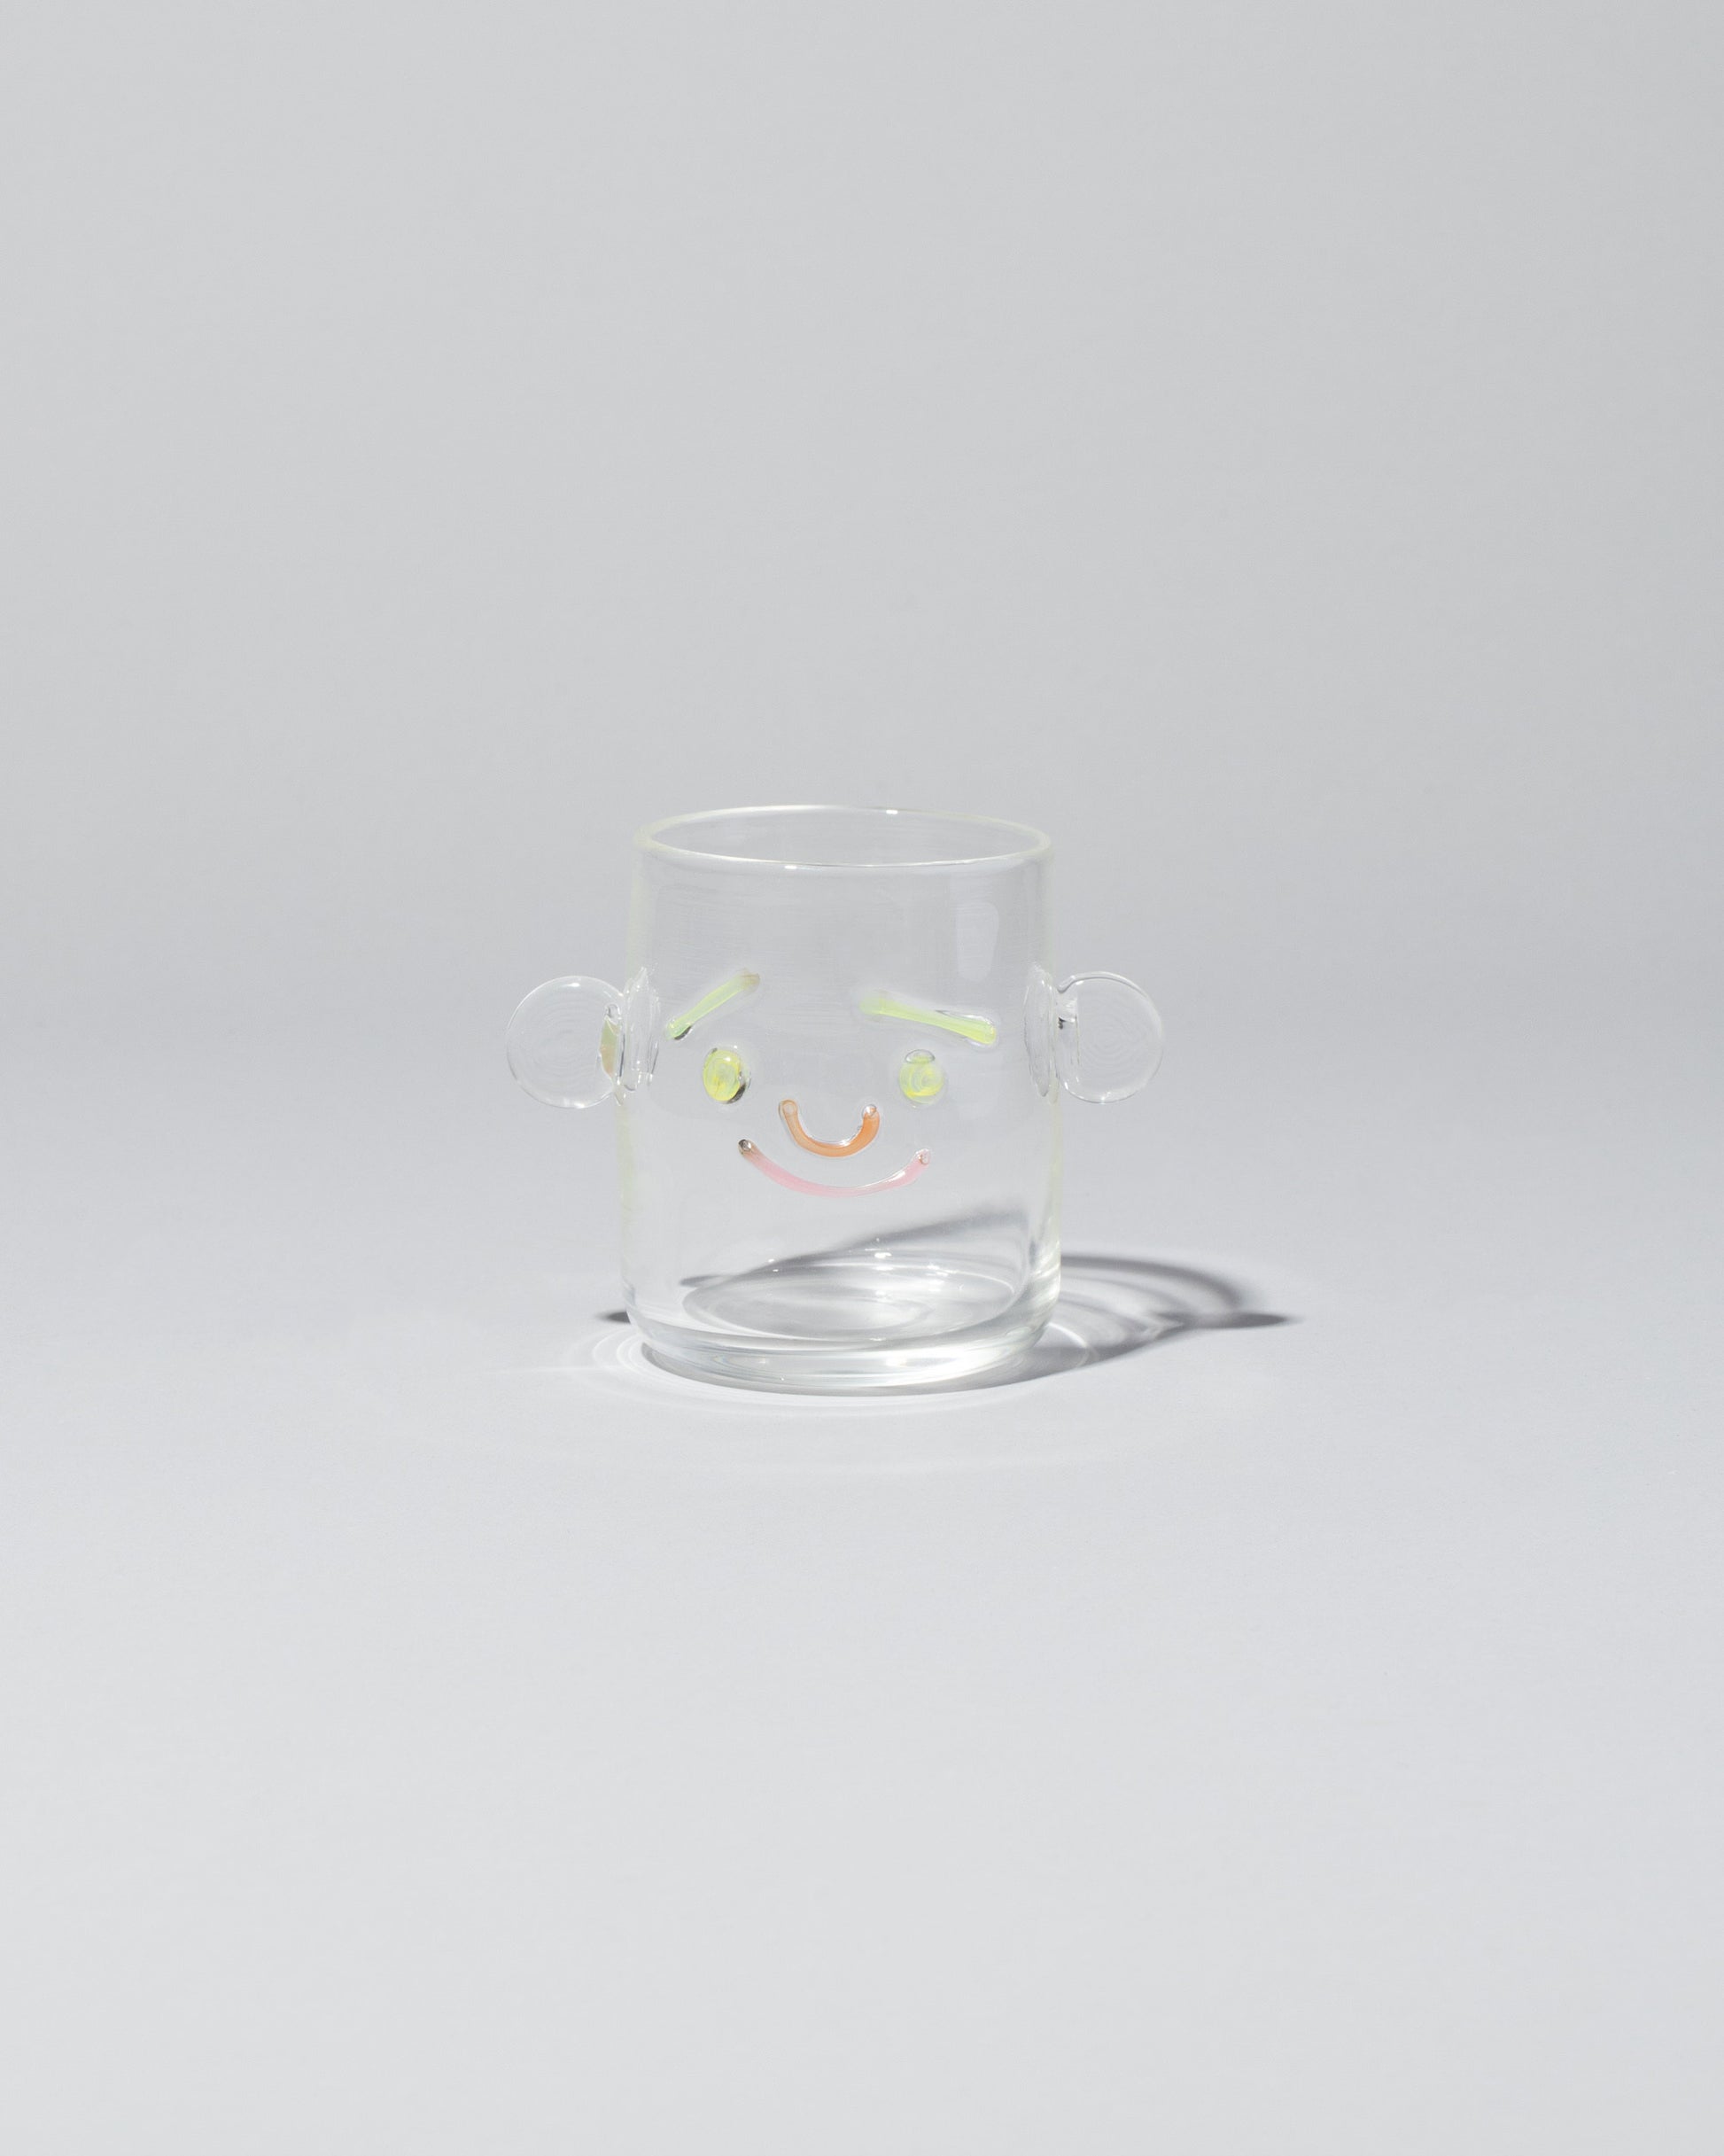 TAK TAK Goods Smiley Face Cup on light color background.